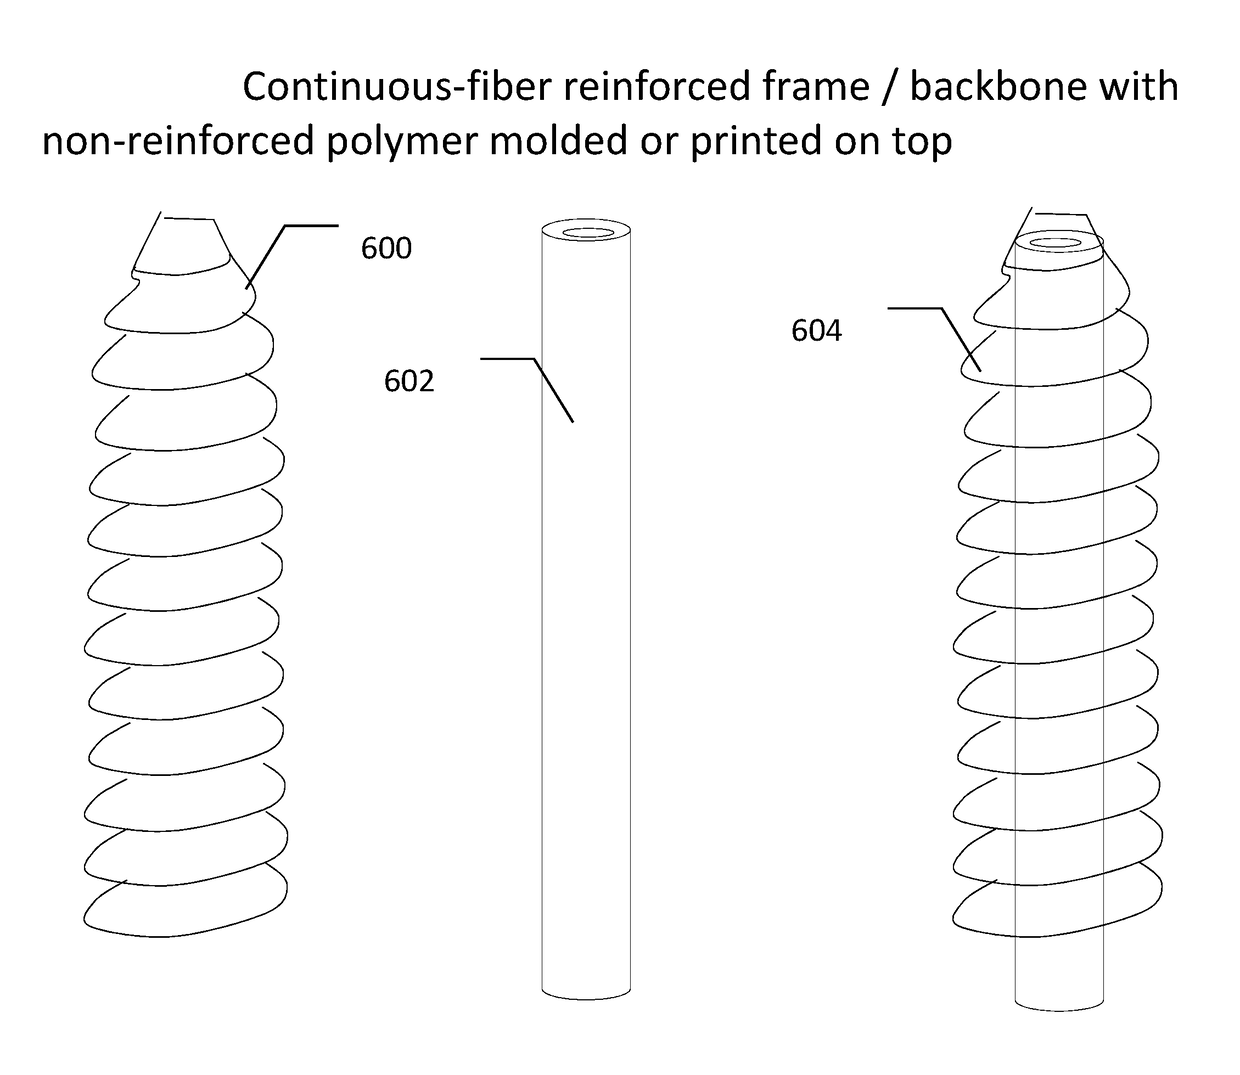 Continuous-fiber reinforced biocomposite medical implants